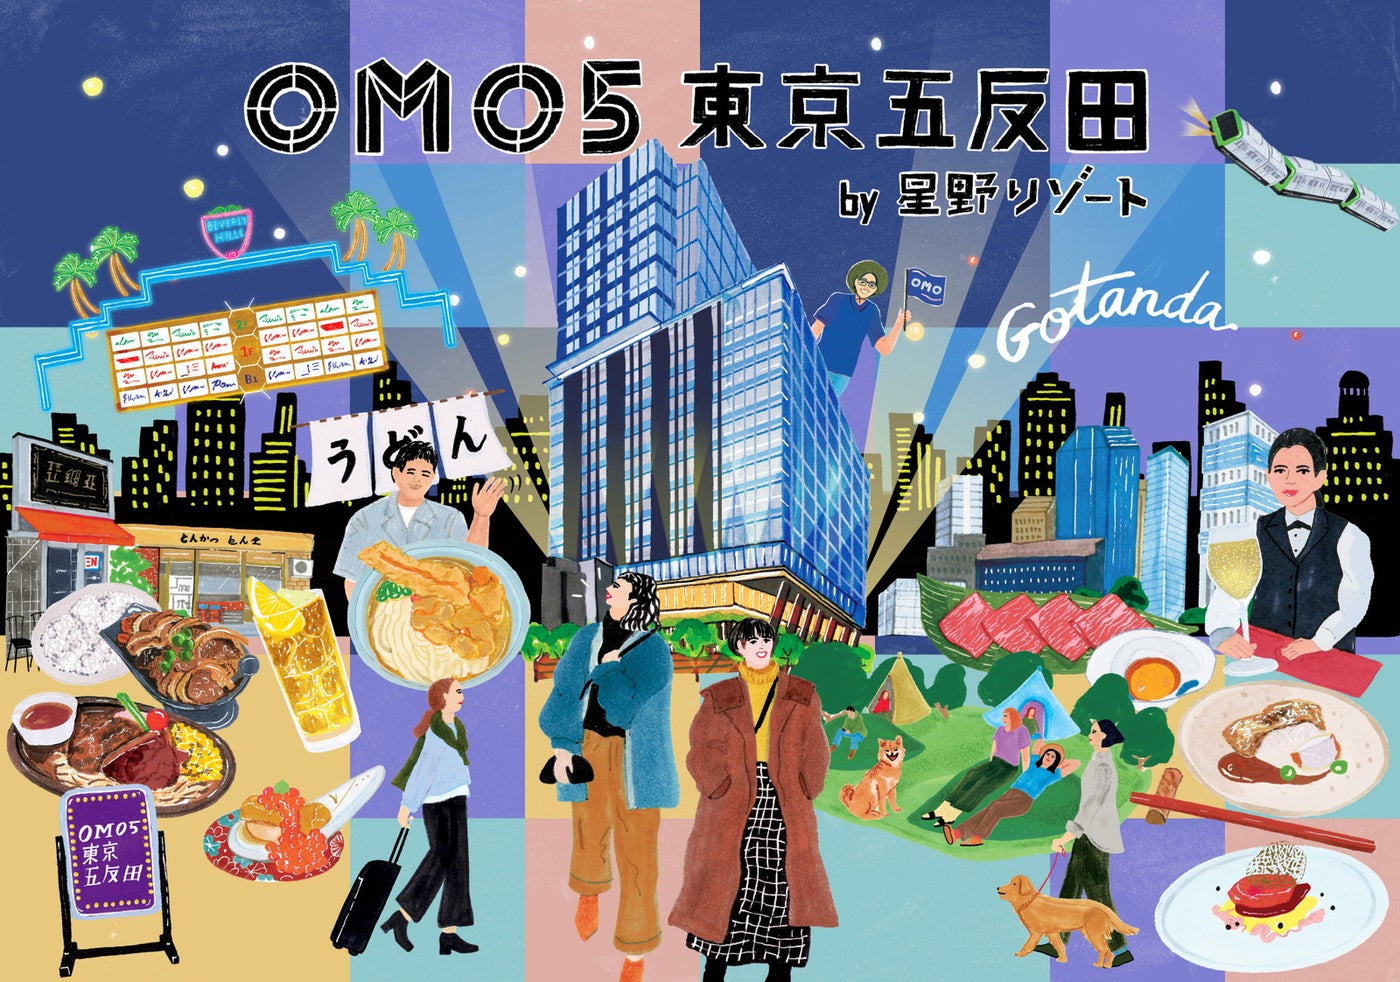 OMO5東京五反⽥ by 星野リゾート／提供画像